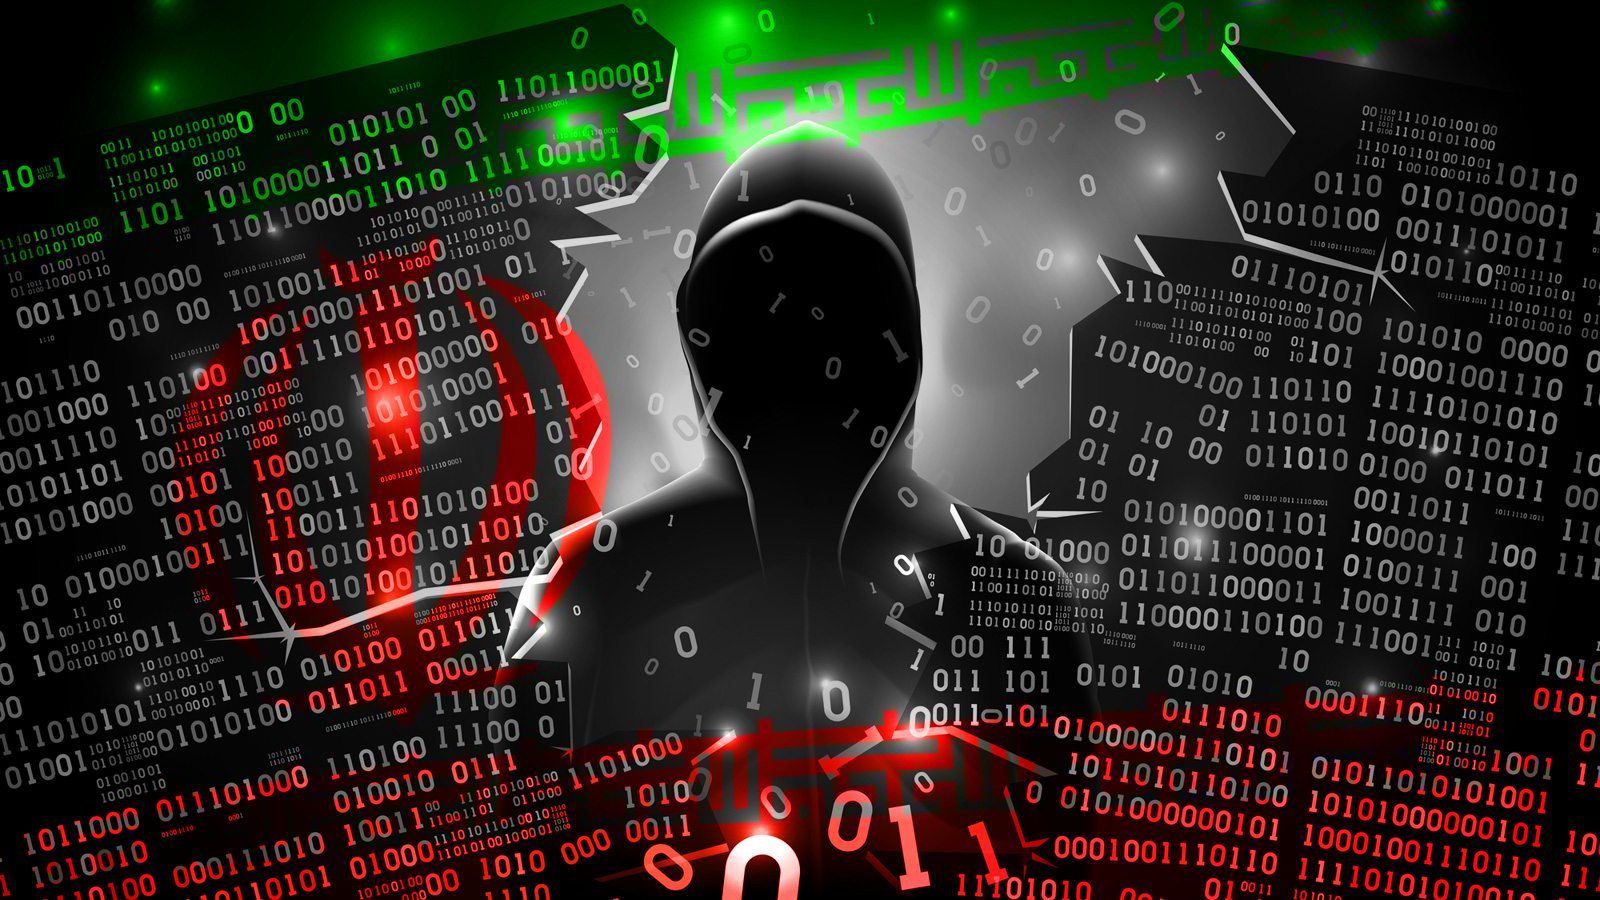 Microsoft: Iranian hacking groups join Papercut attack spree – Source: www.bleepingcomputer.com